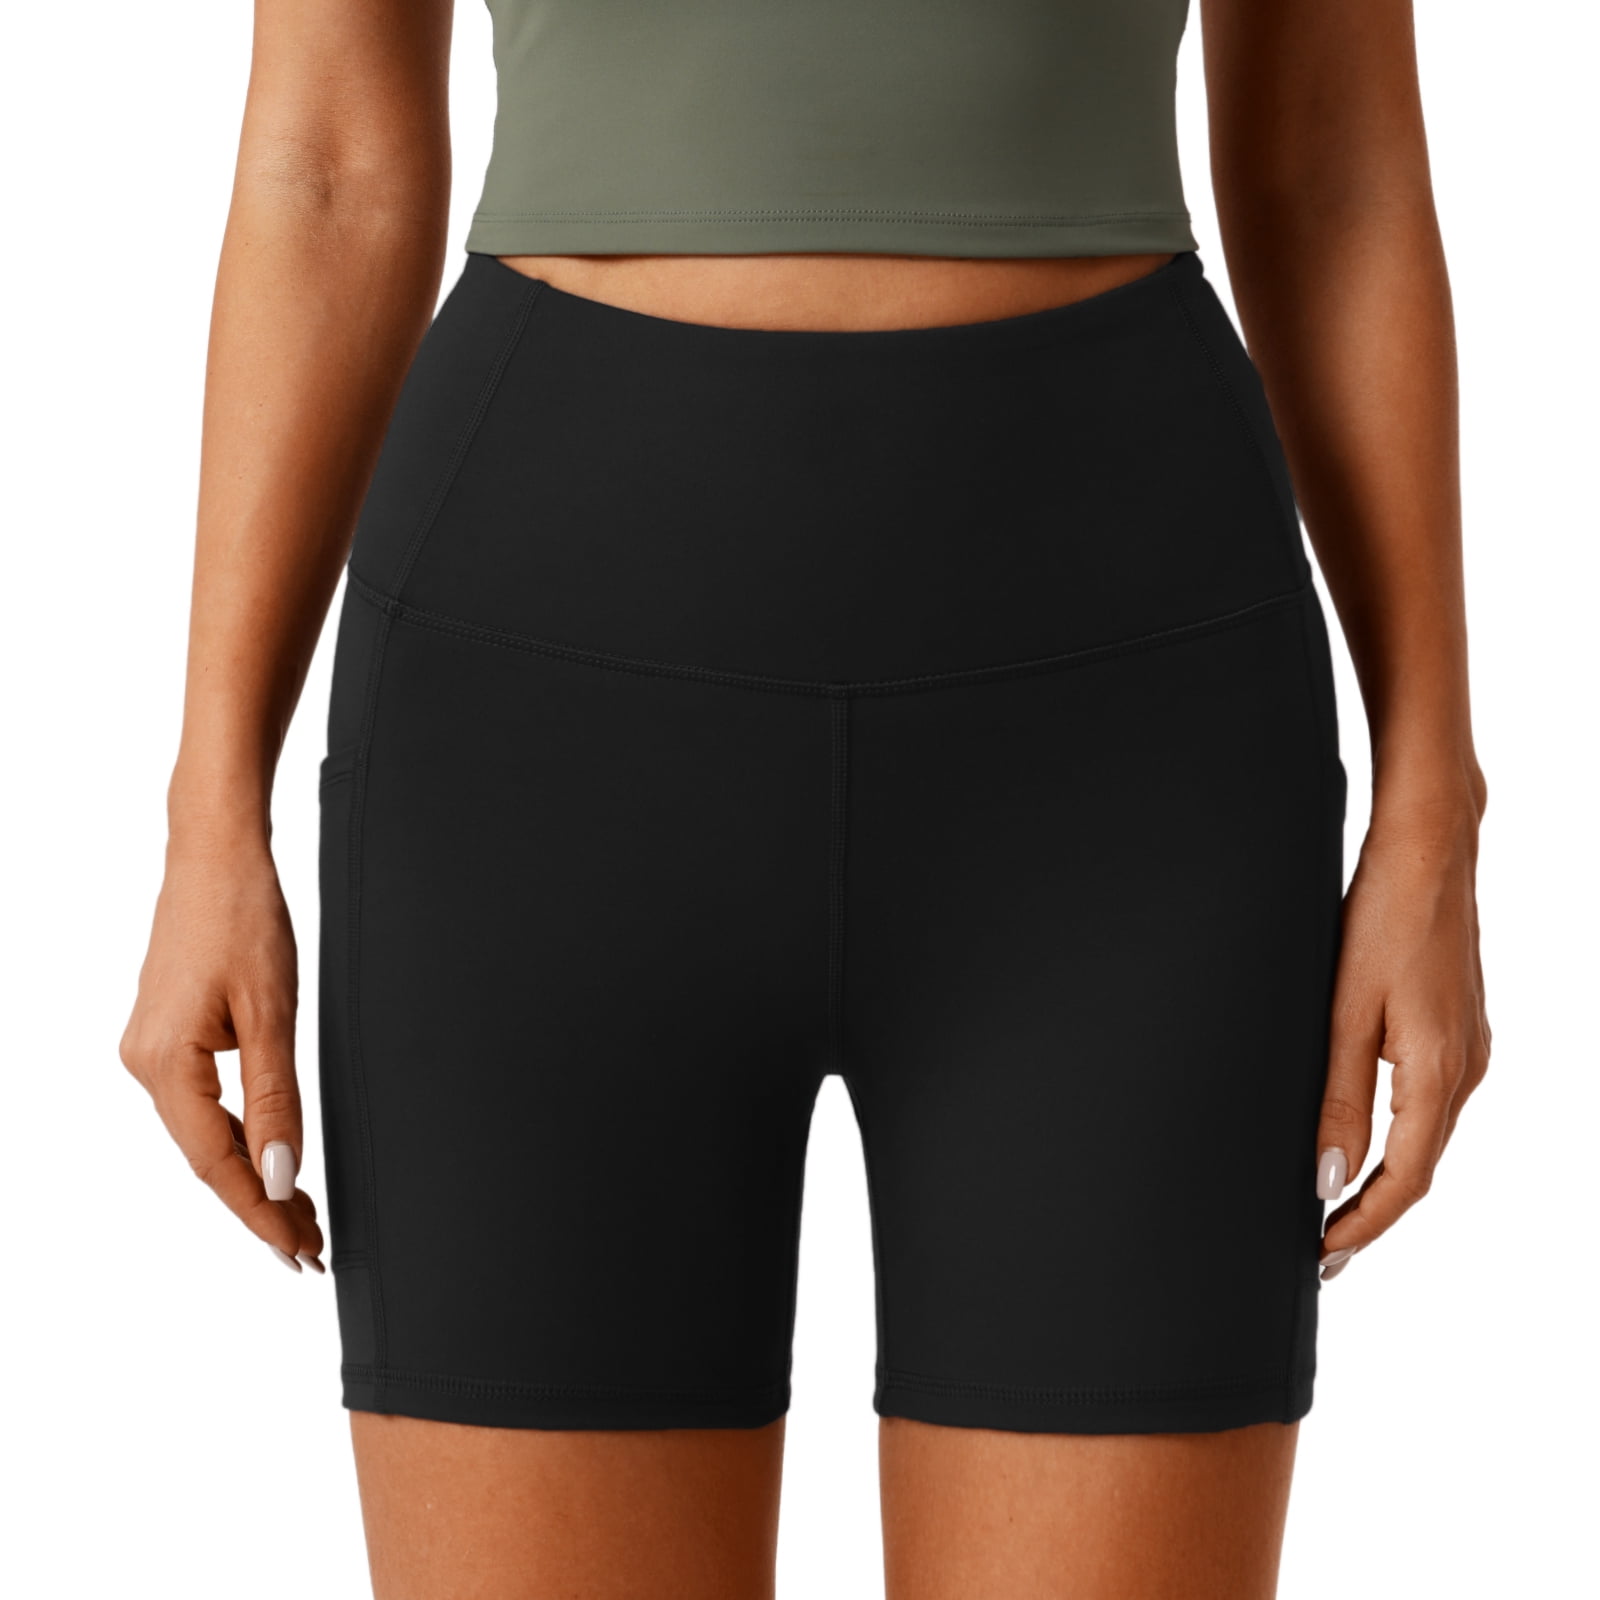 Ipletix Biker Shorts for Women, 6 High Waist Biker Shorts Black Workout  Shorts for Running Yoga Athletic at  Women's Clothing store